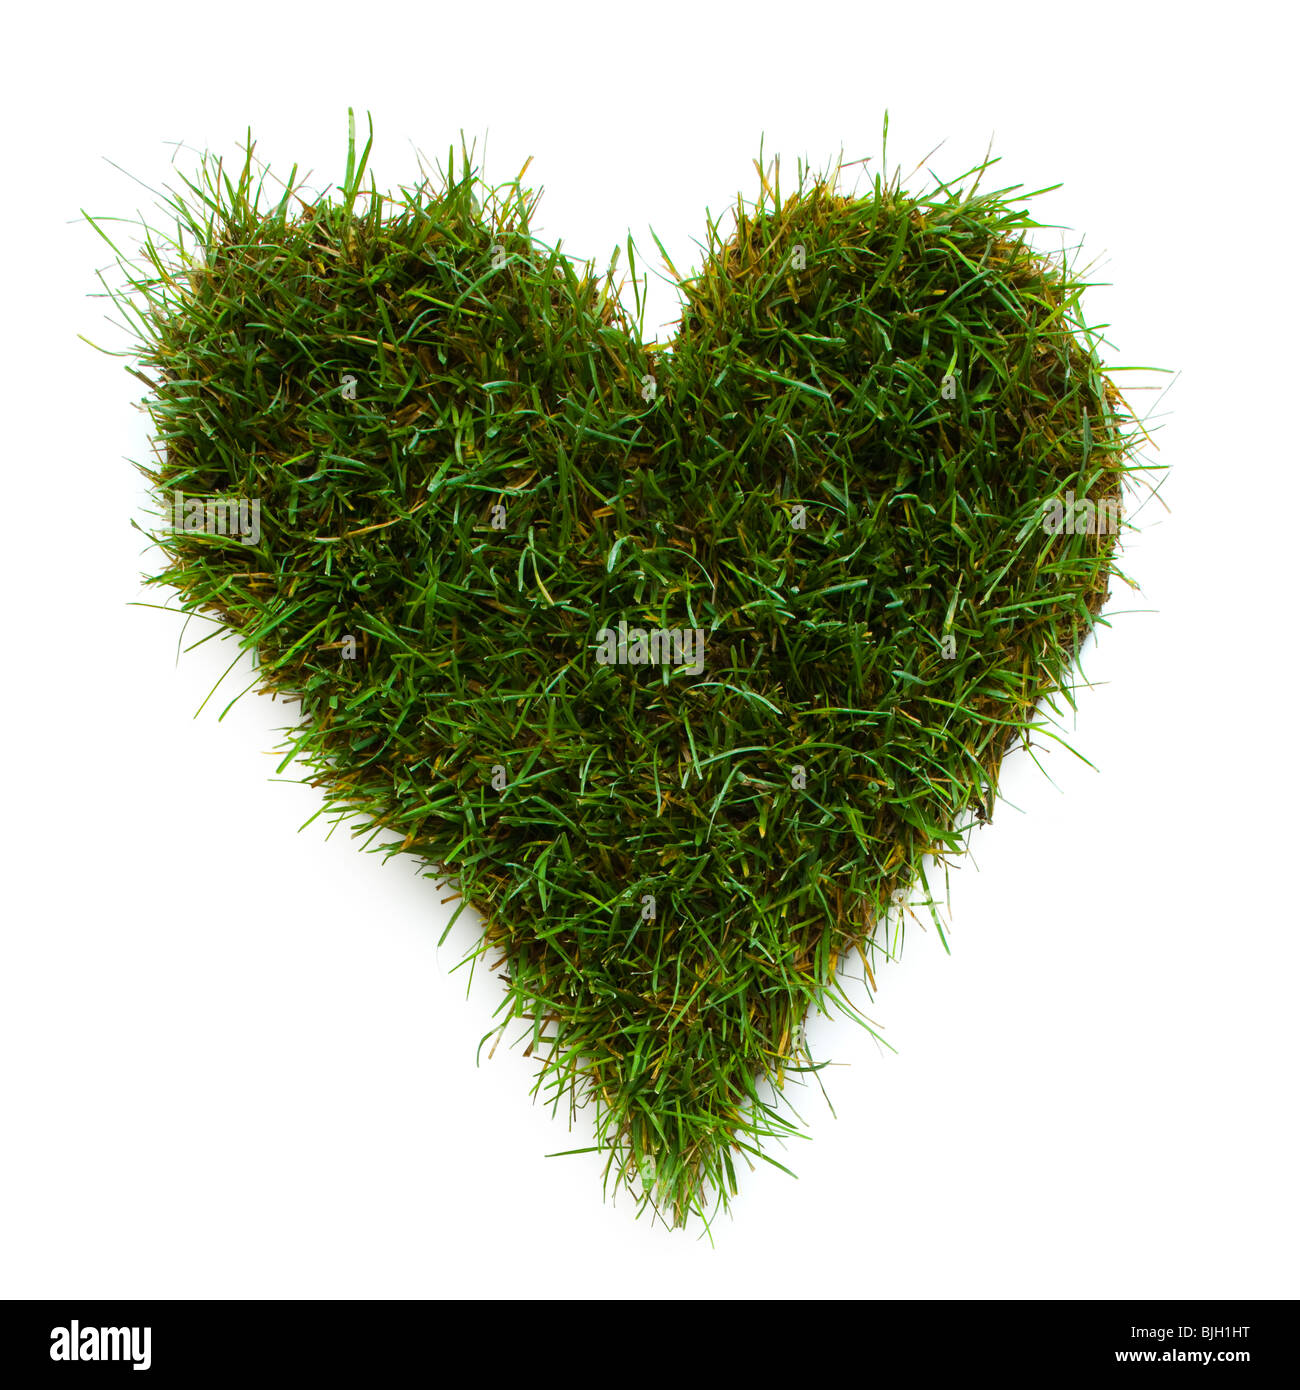 heart shape made of grass Stock Photo